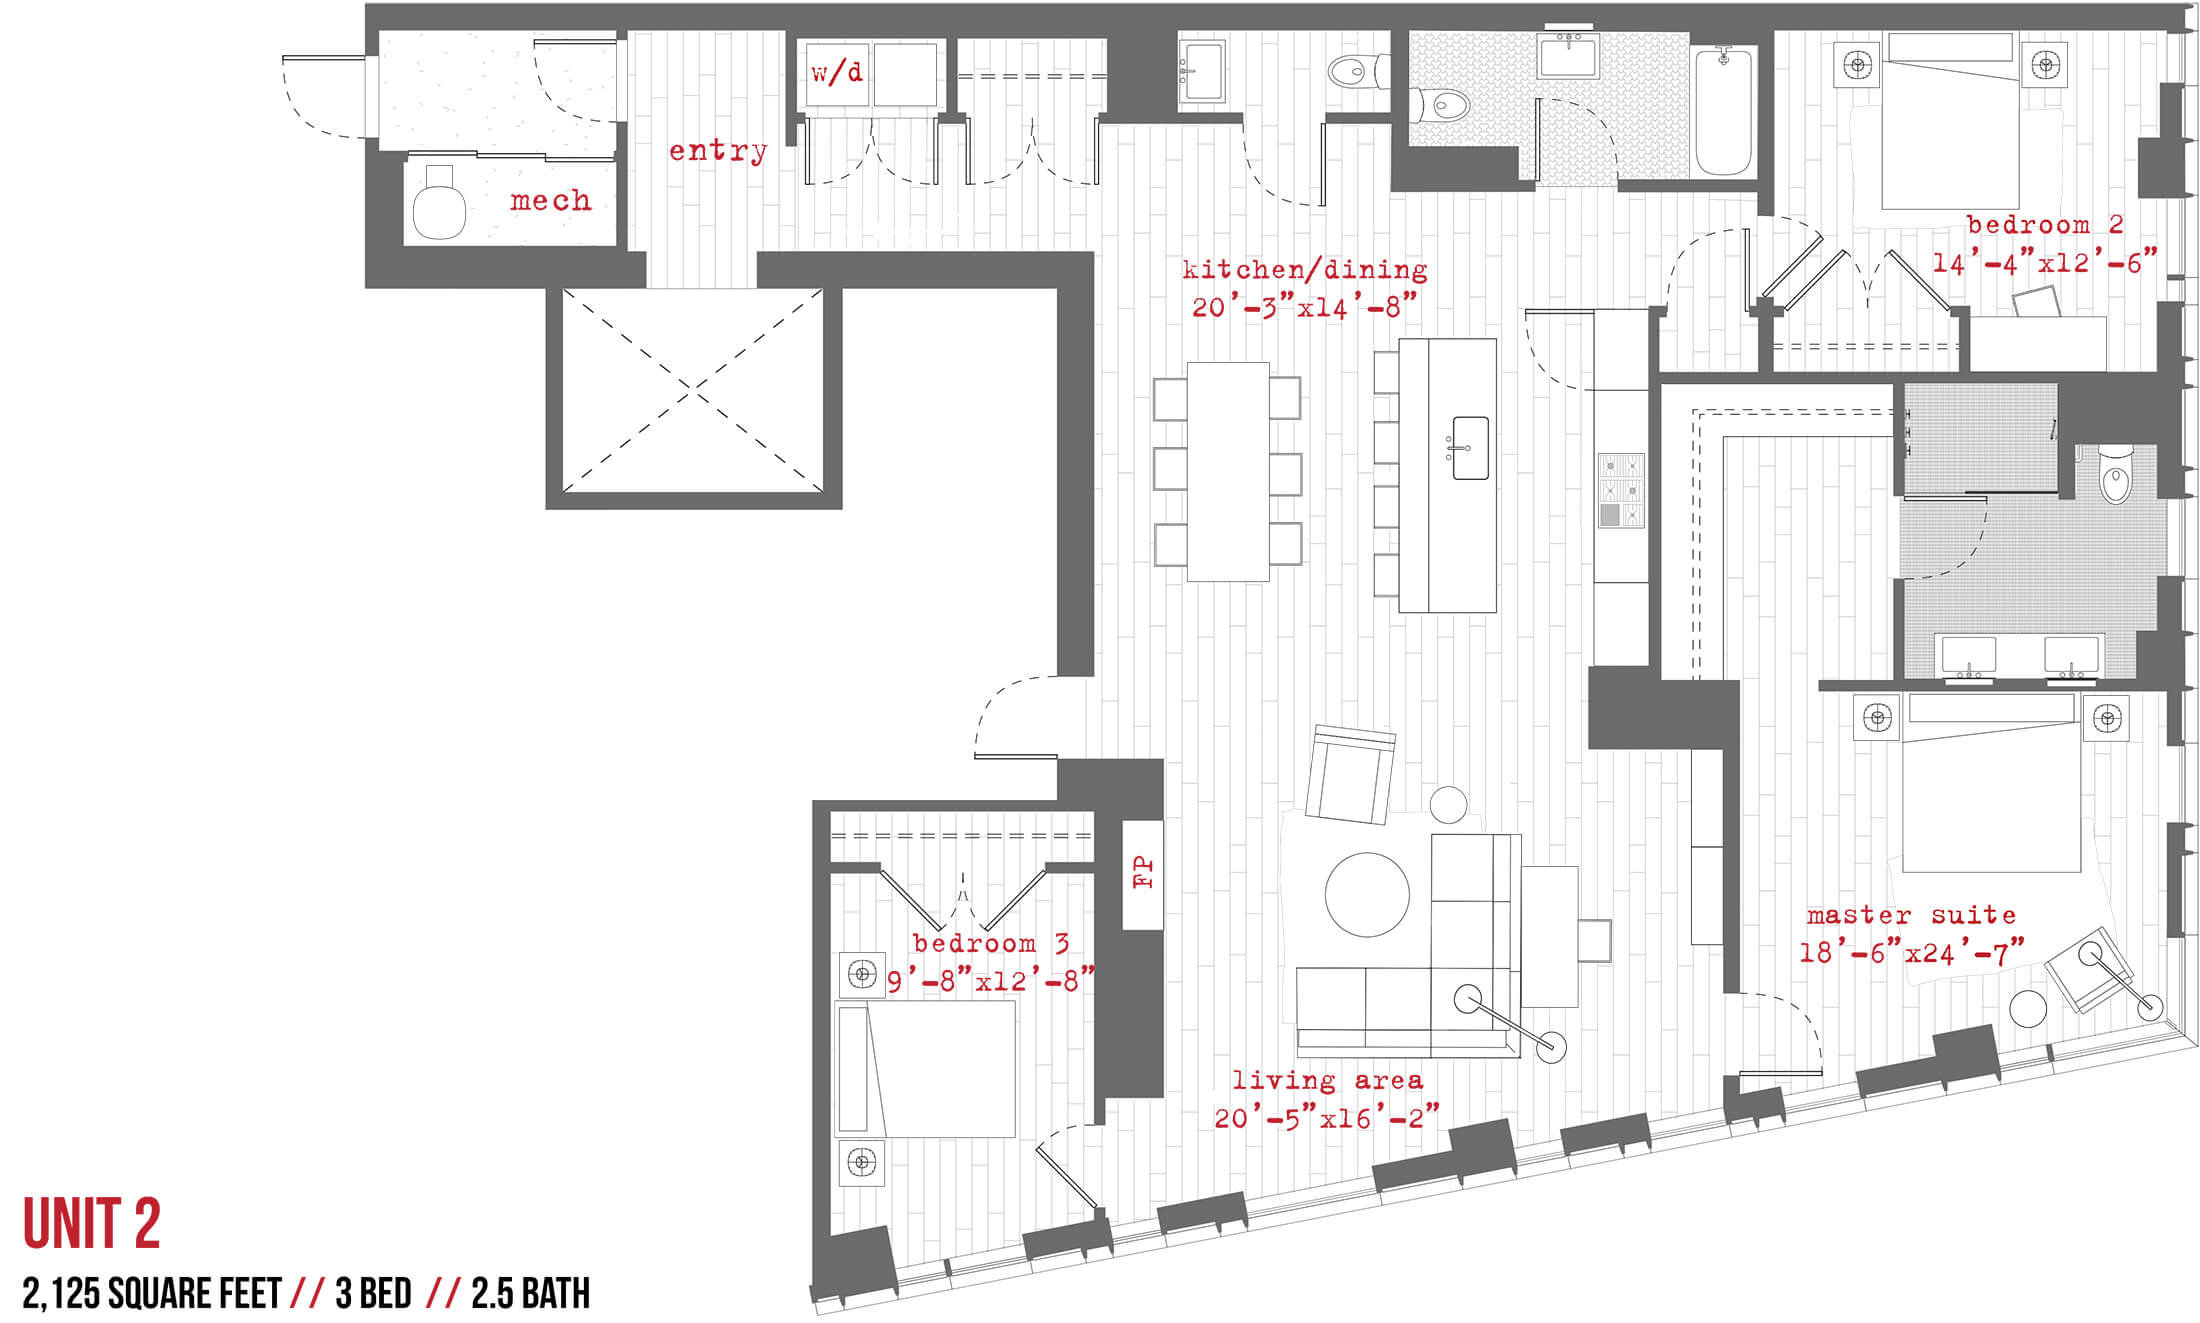 Unit 2 Floor Plan.jpg